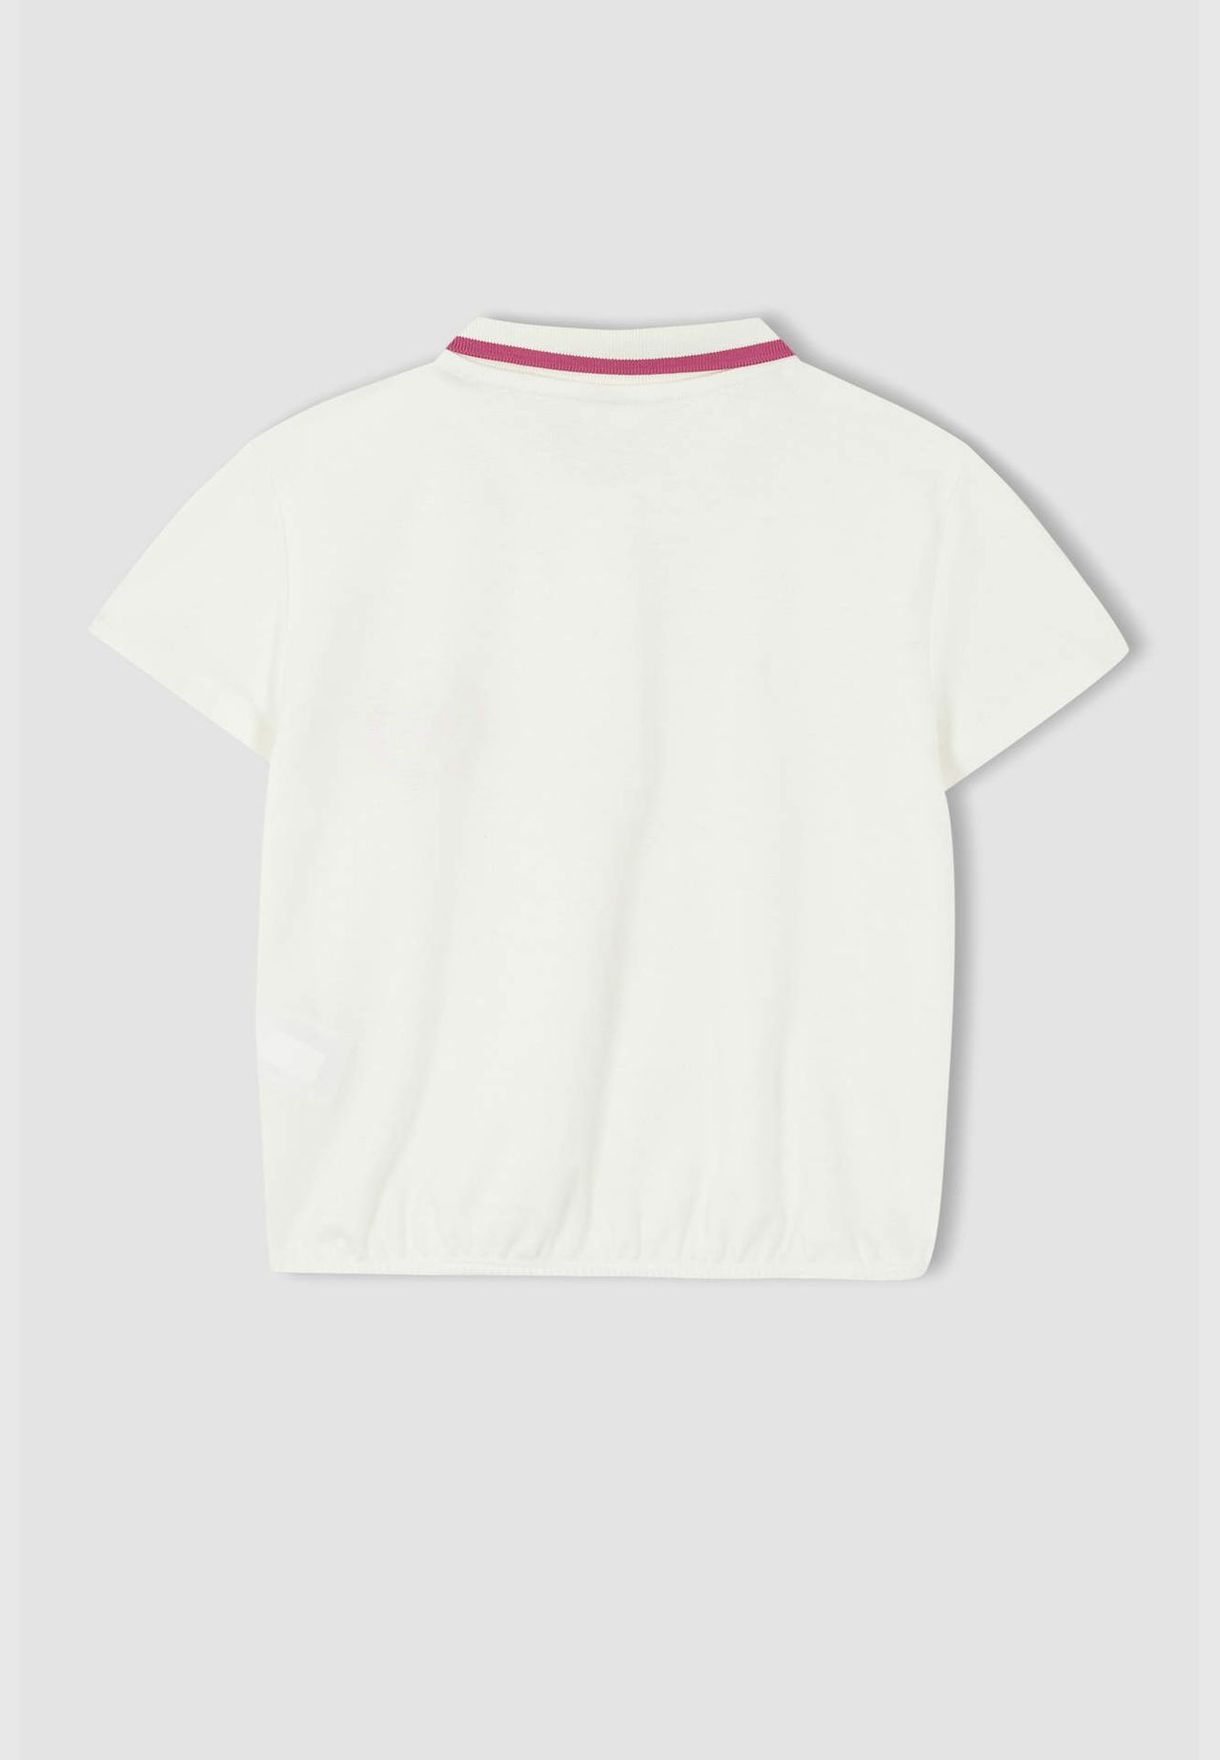 Short Sleeve Colour Block Printed T-Shirt